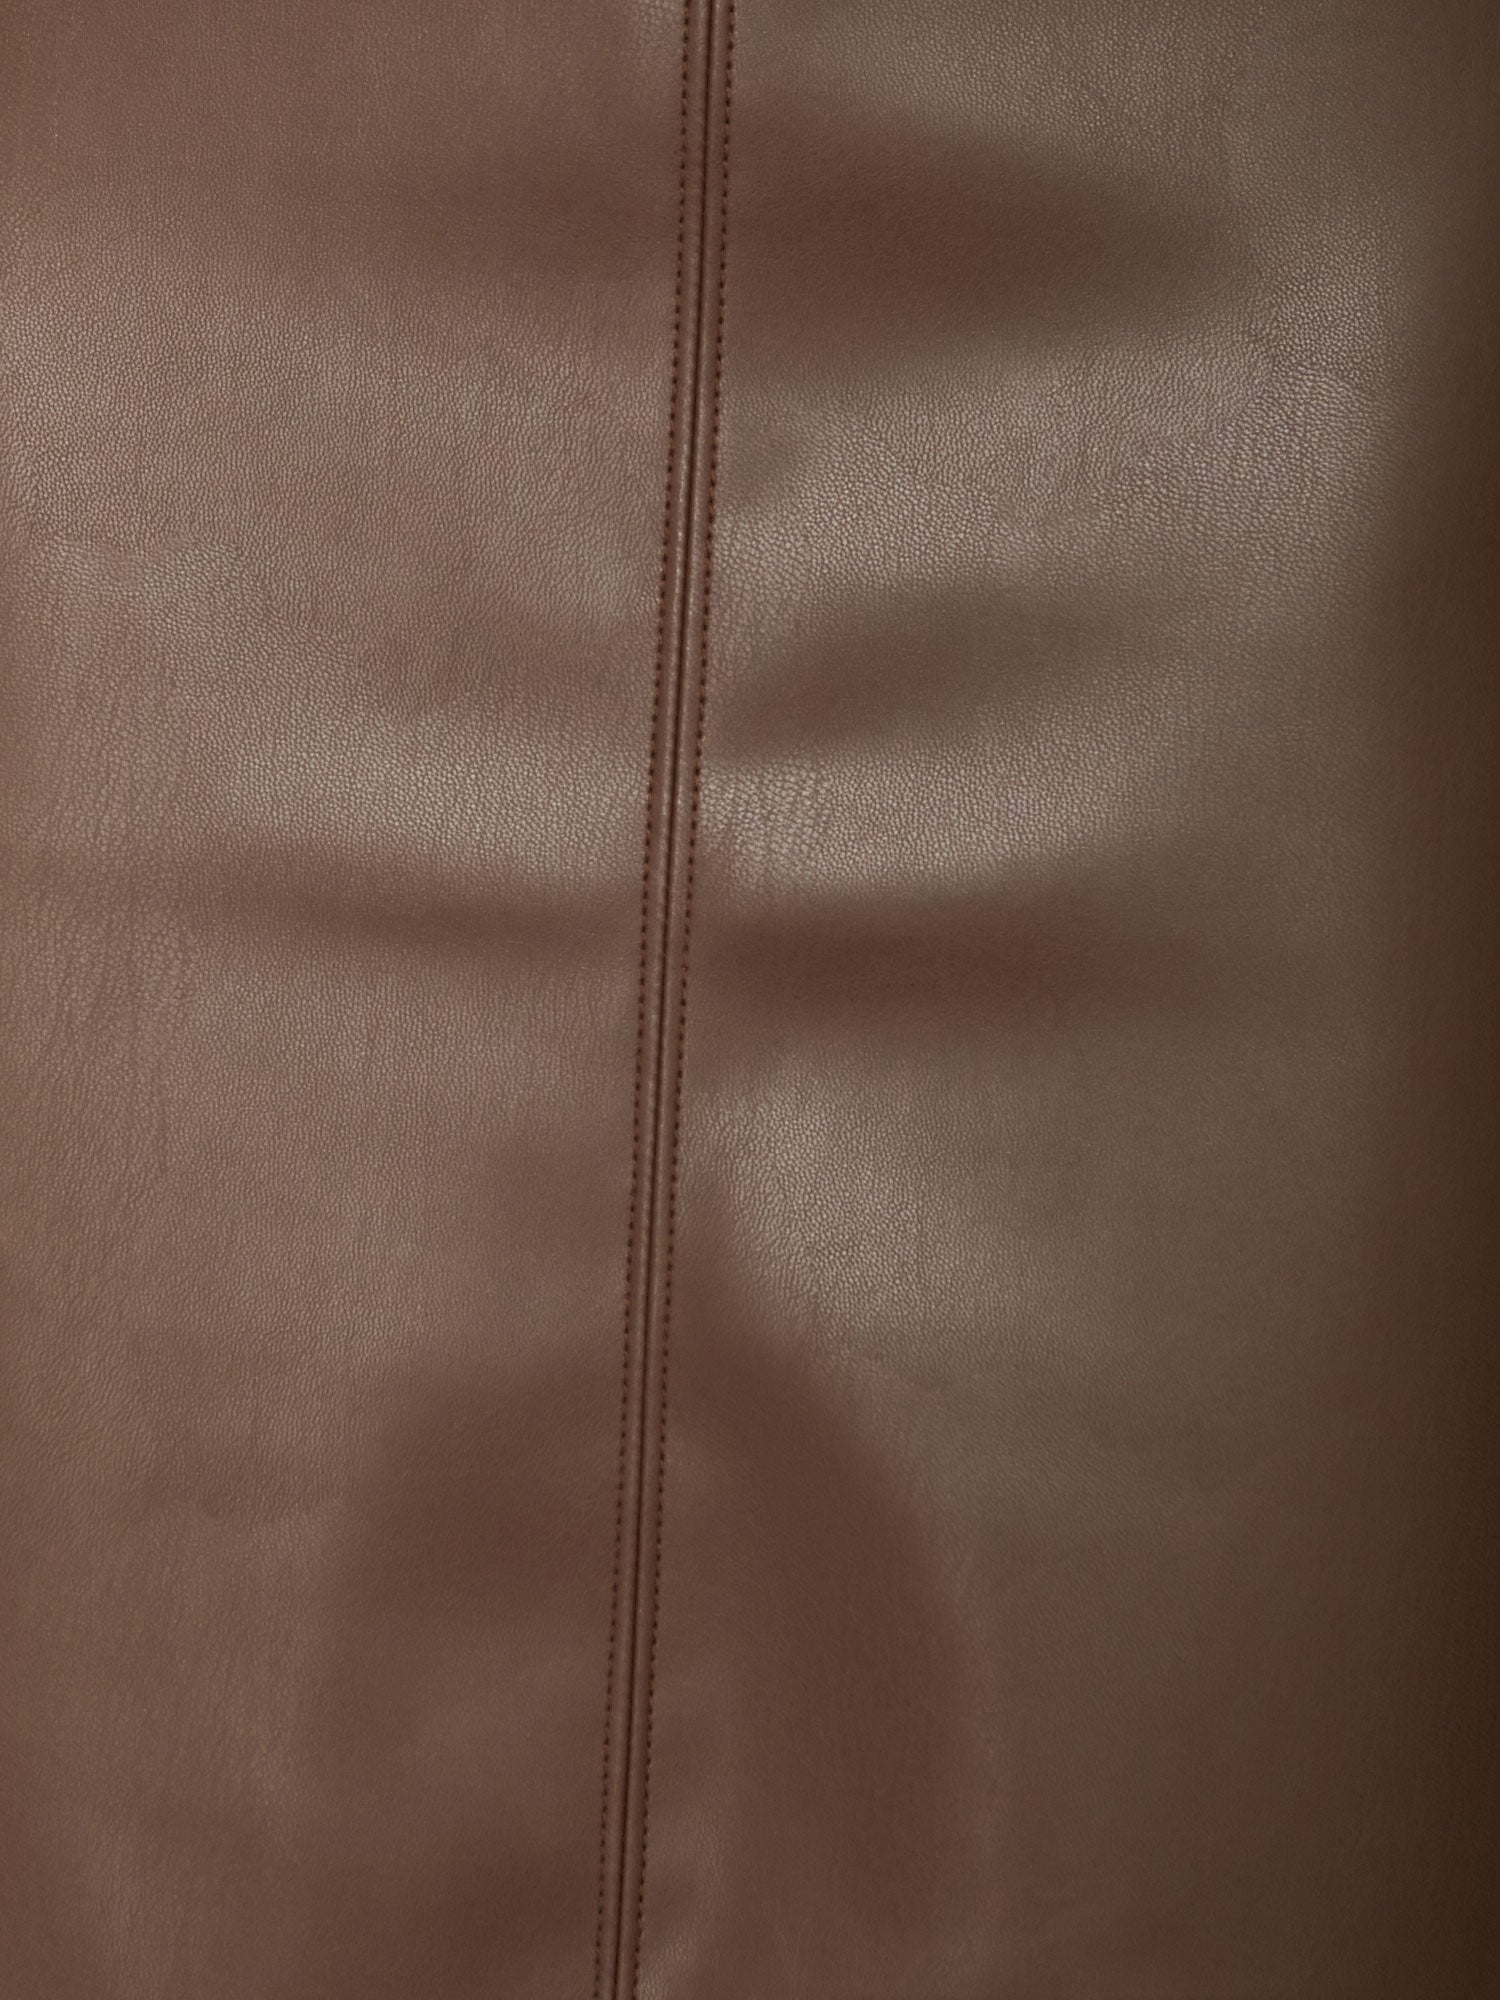 River brown vegan leather knee-length skirt close up